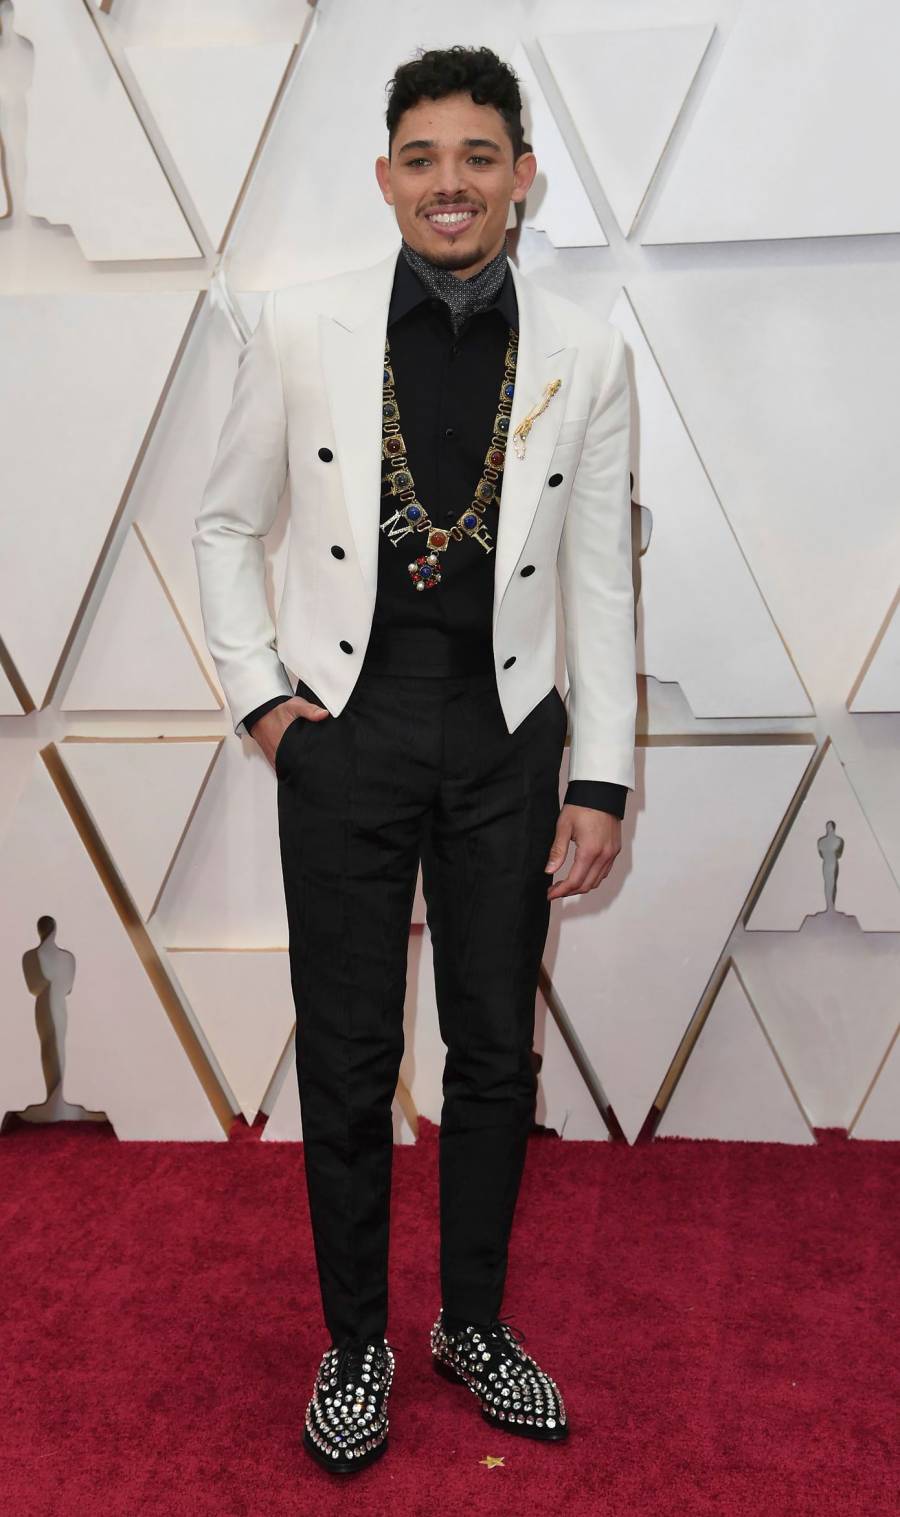 Oscars 2020 Best Dressed Men - Anthony Ramos